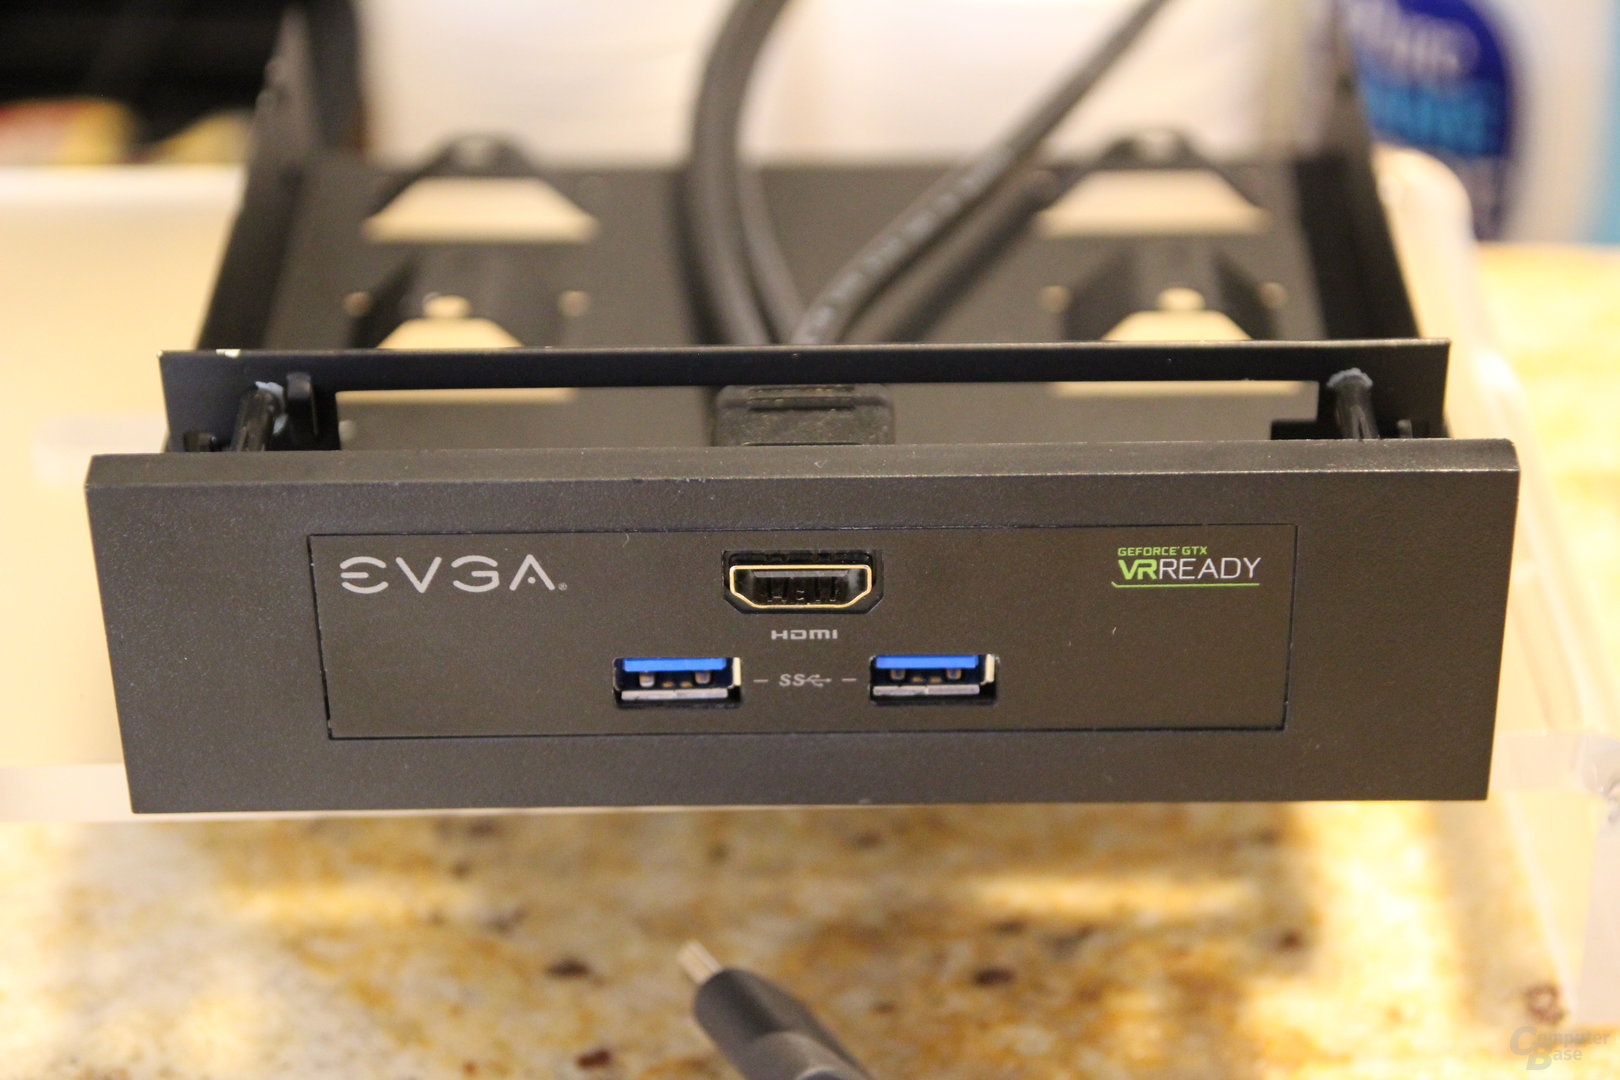 EVGA GeForce GTX 980 Ti VR